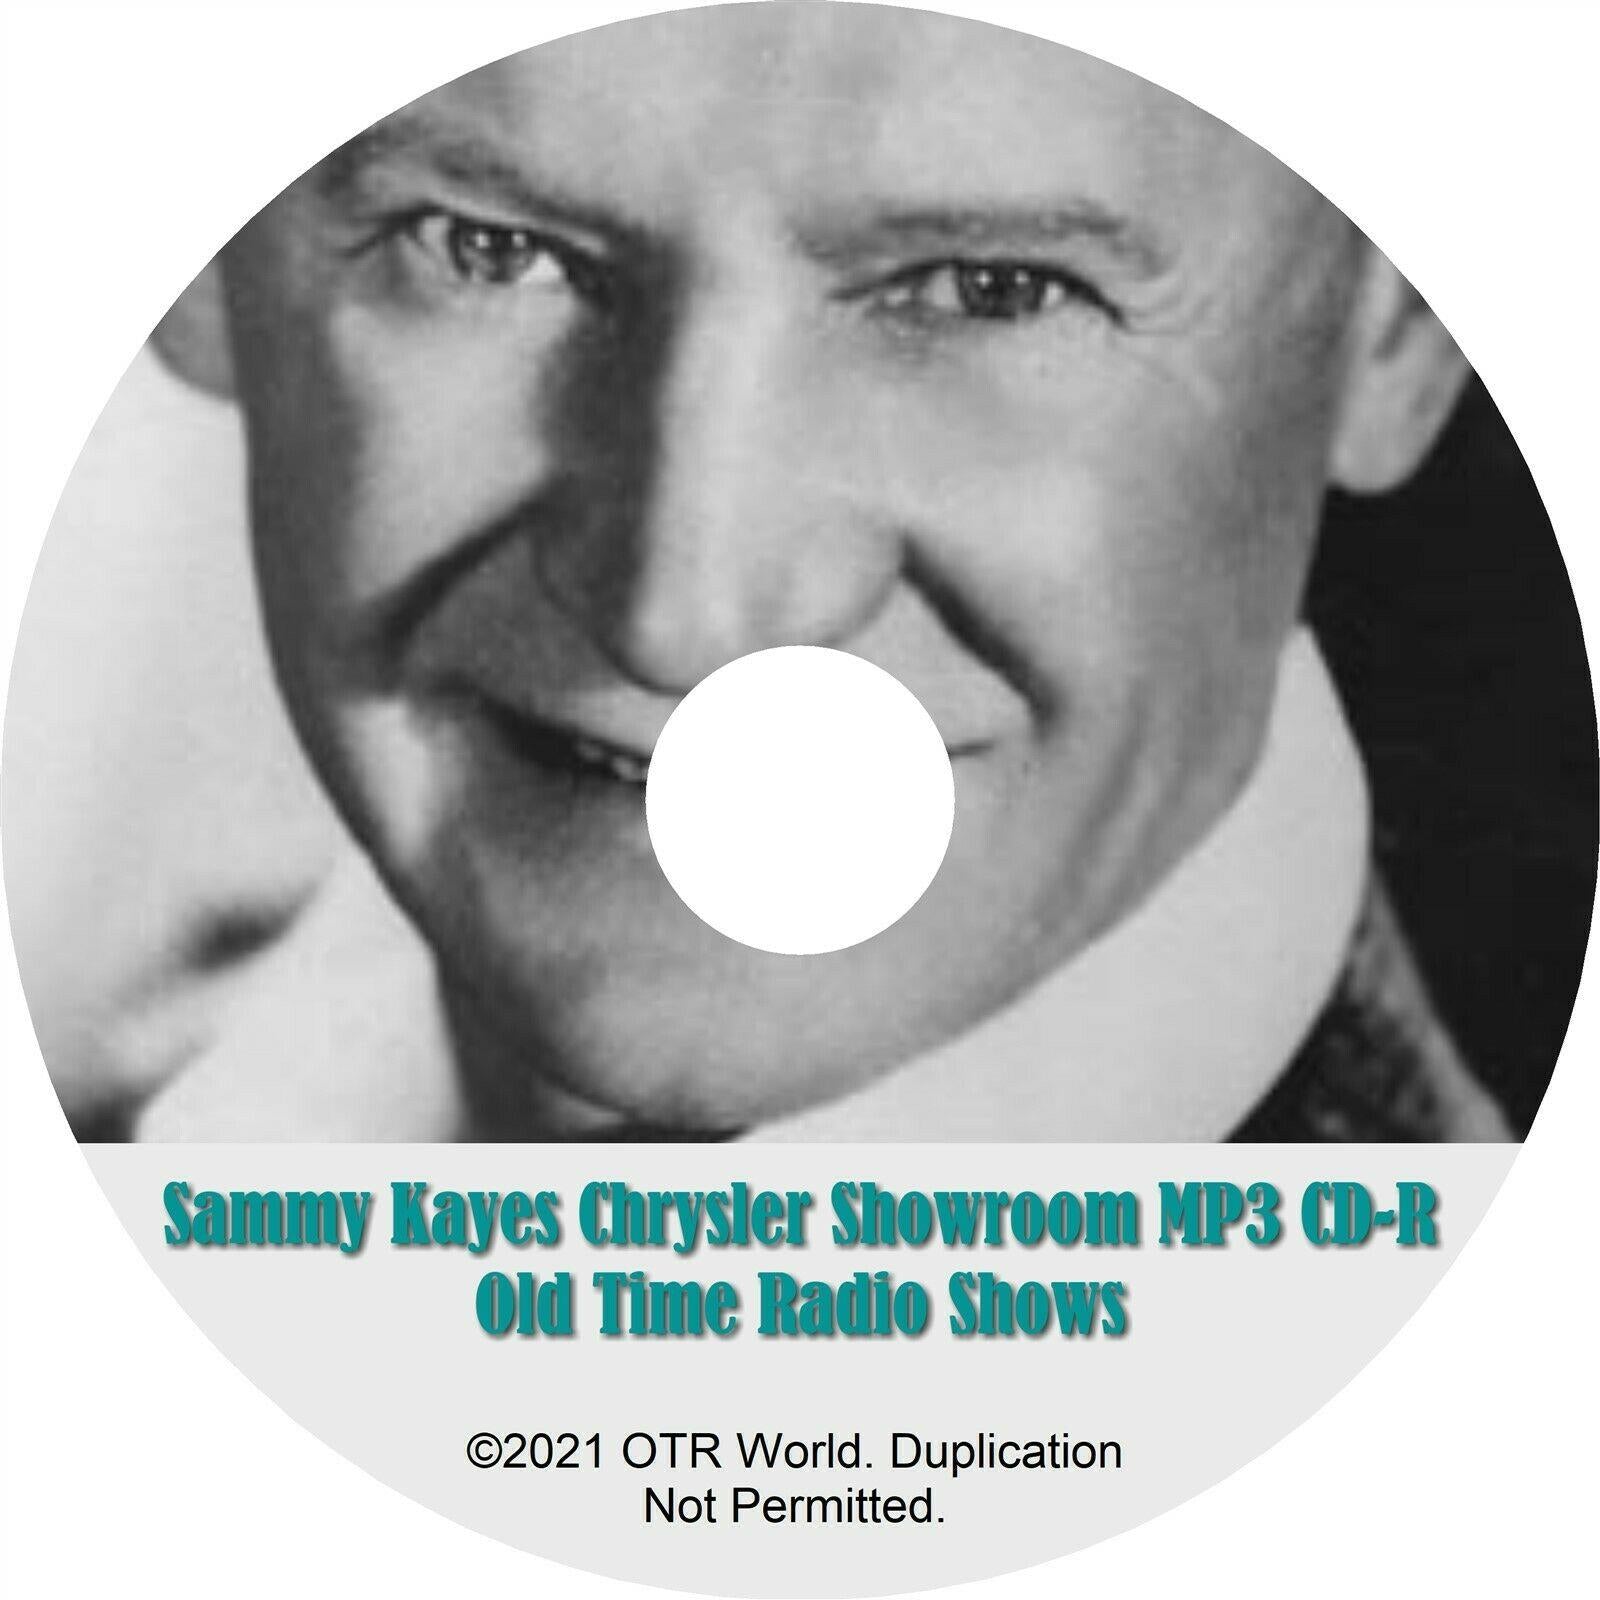 Sammy Kayes Chrysler Showroom OTR Old Time Radio Shows MP3 On CD-R 75Episodes